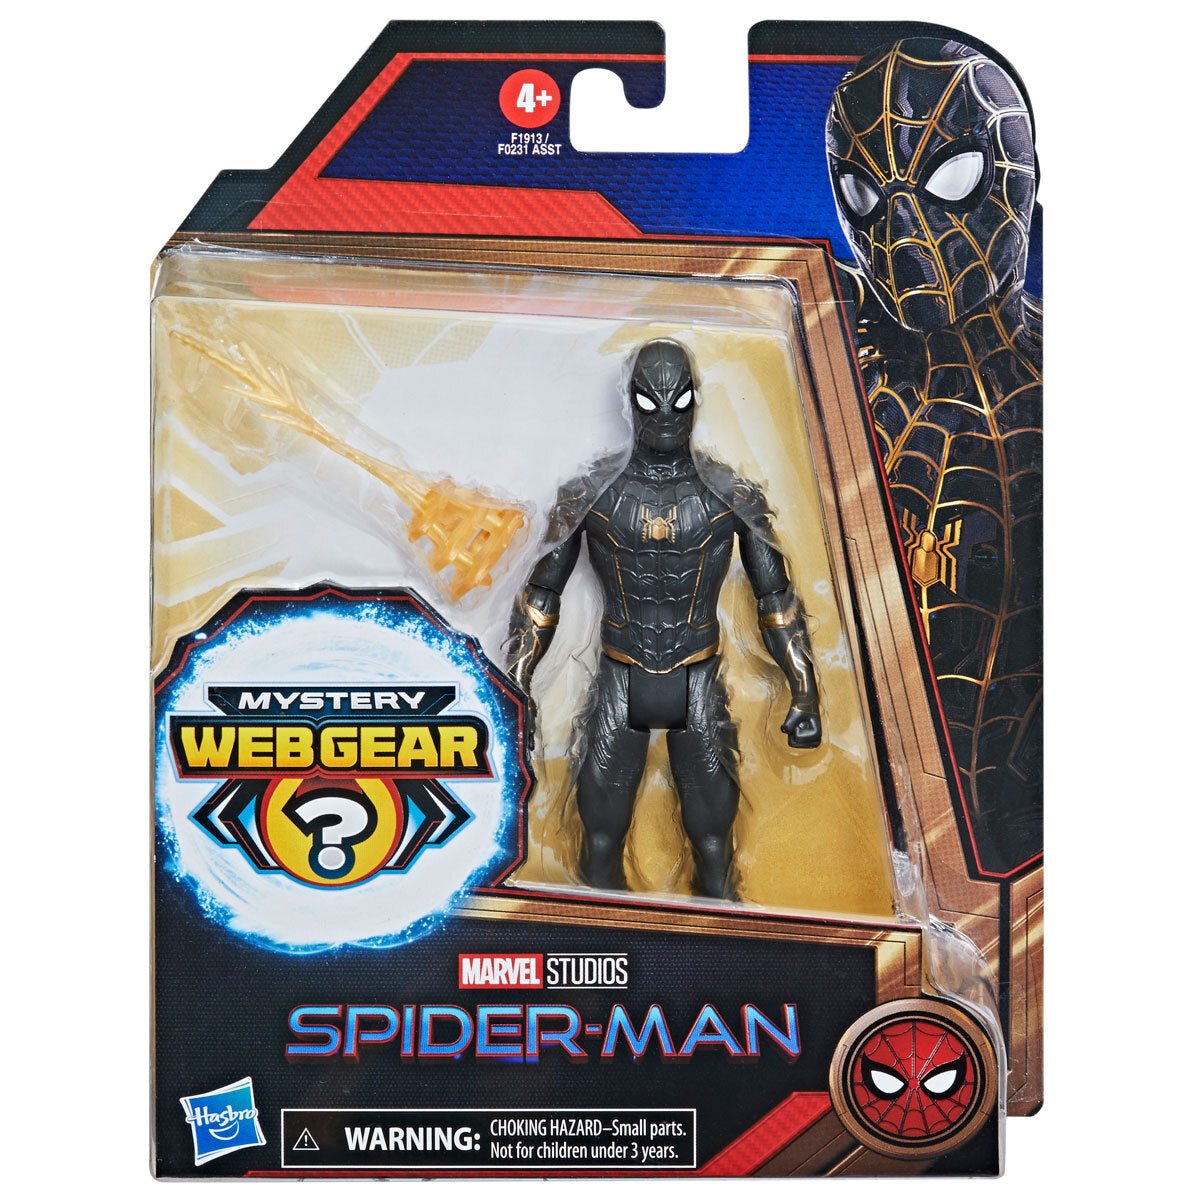 Marvel Spider-Man Mystery Web Gear (Styles Vary)